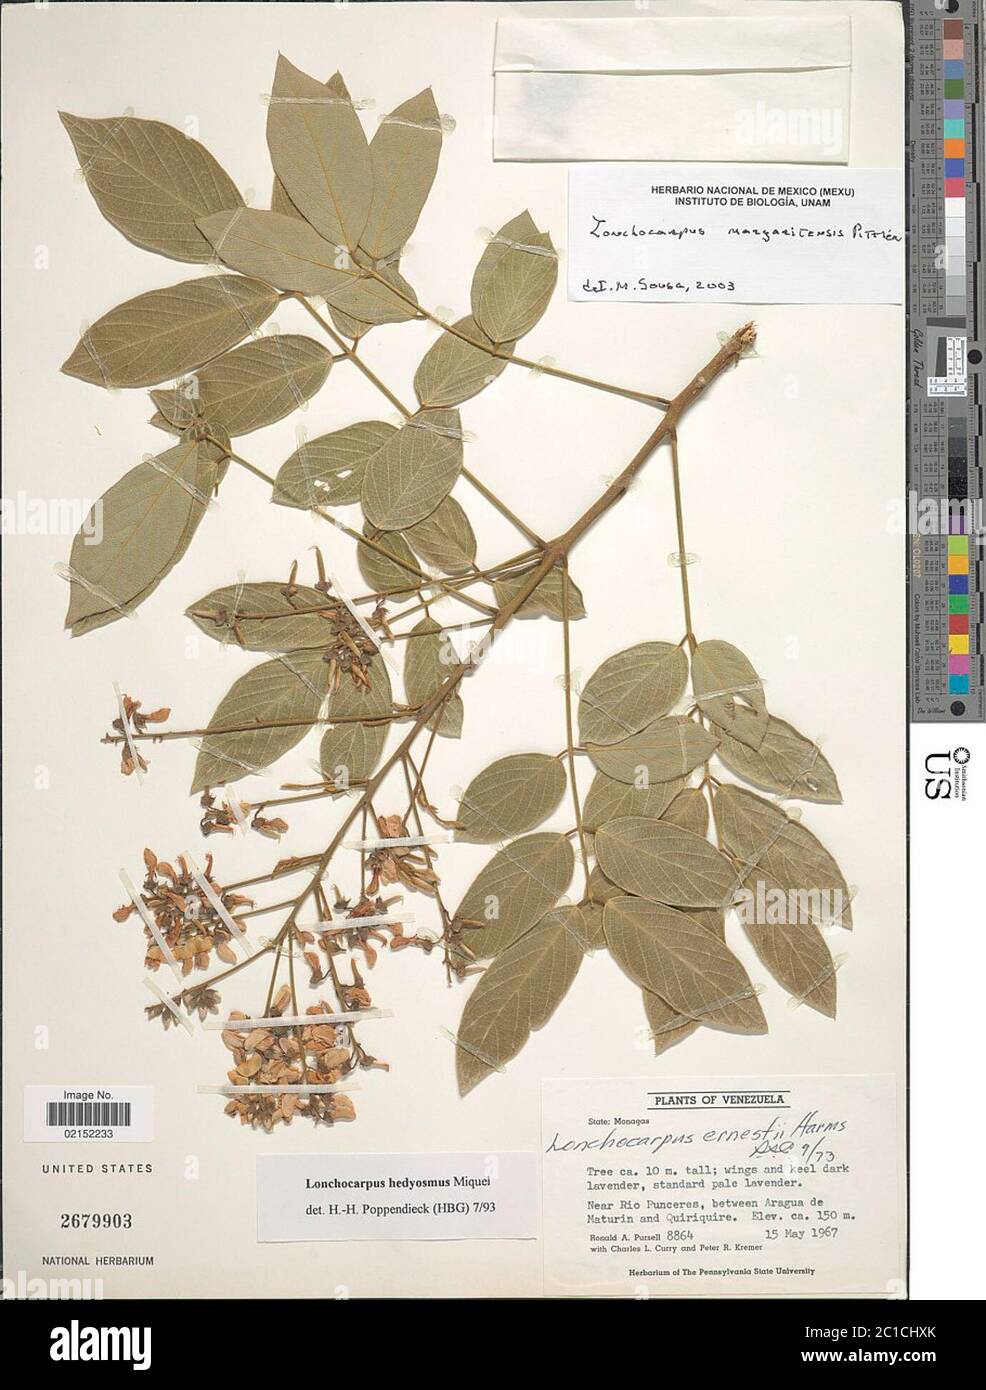 Lonchocarpus margaritensis Pittier Lonchocarpus margaritensis Pittier. Stock Photo